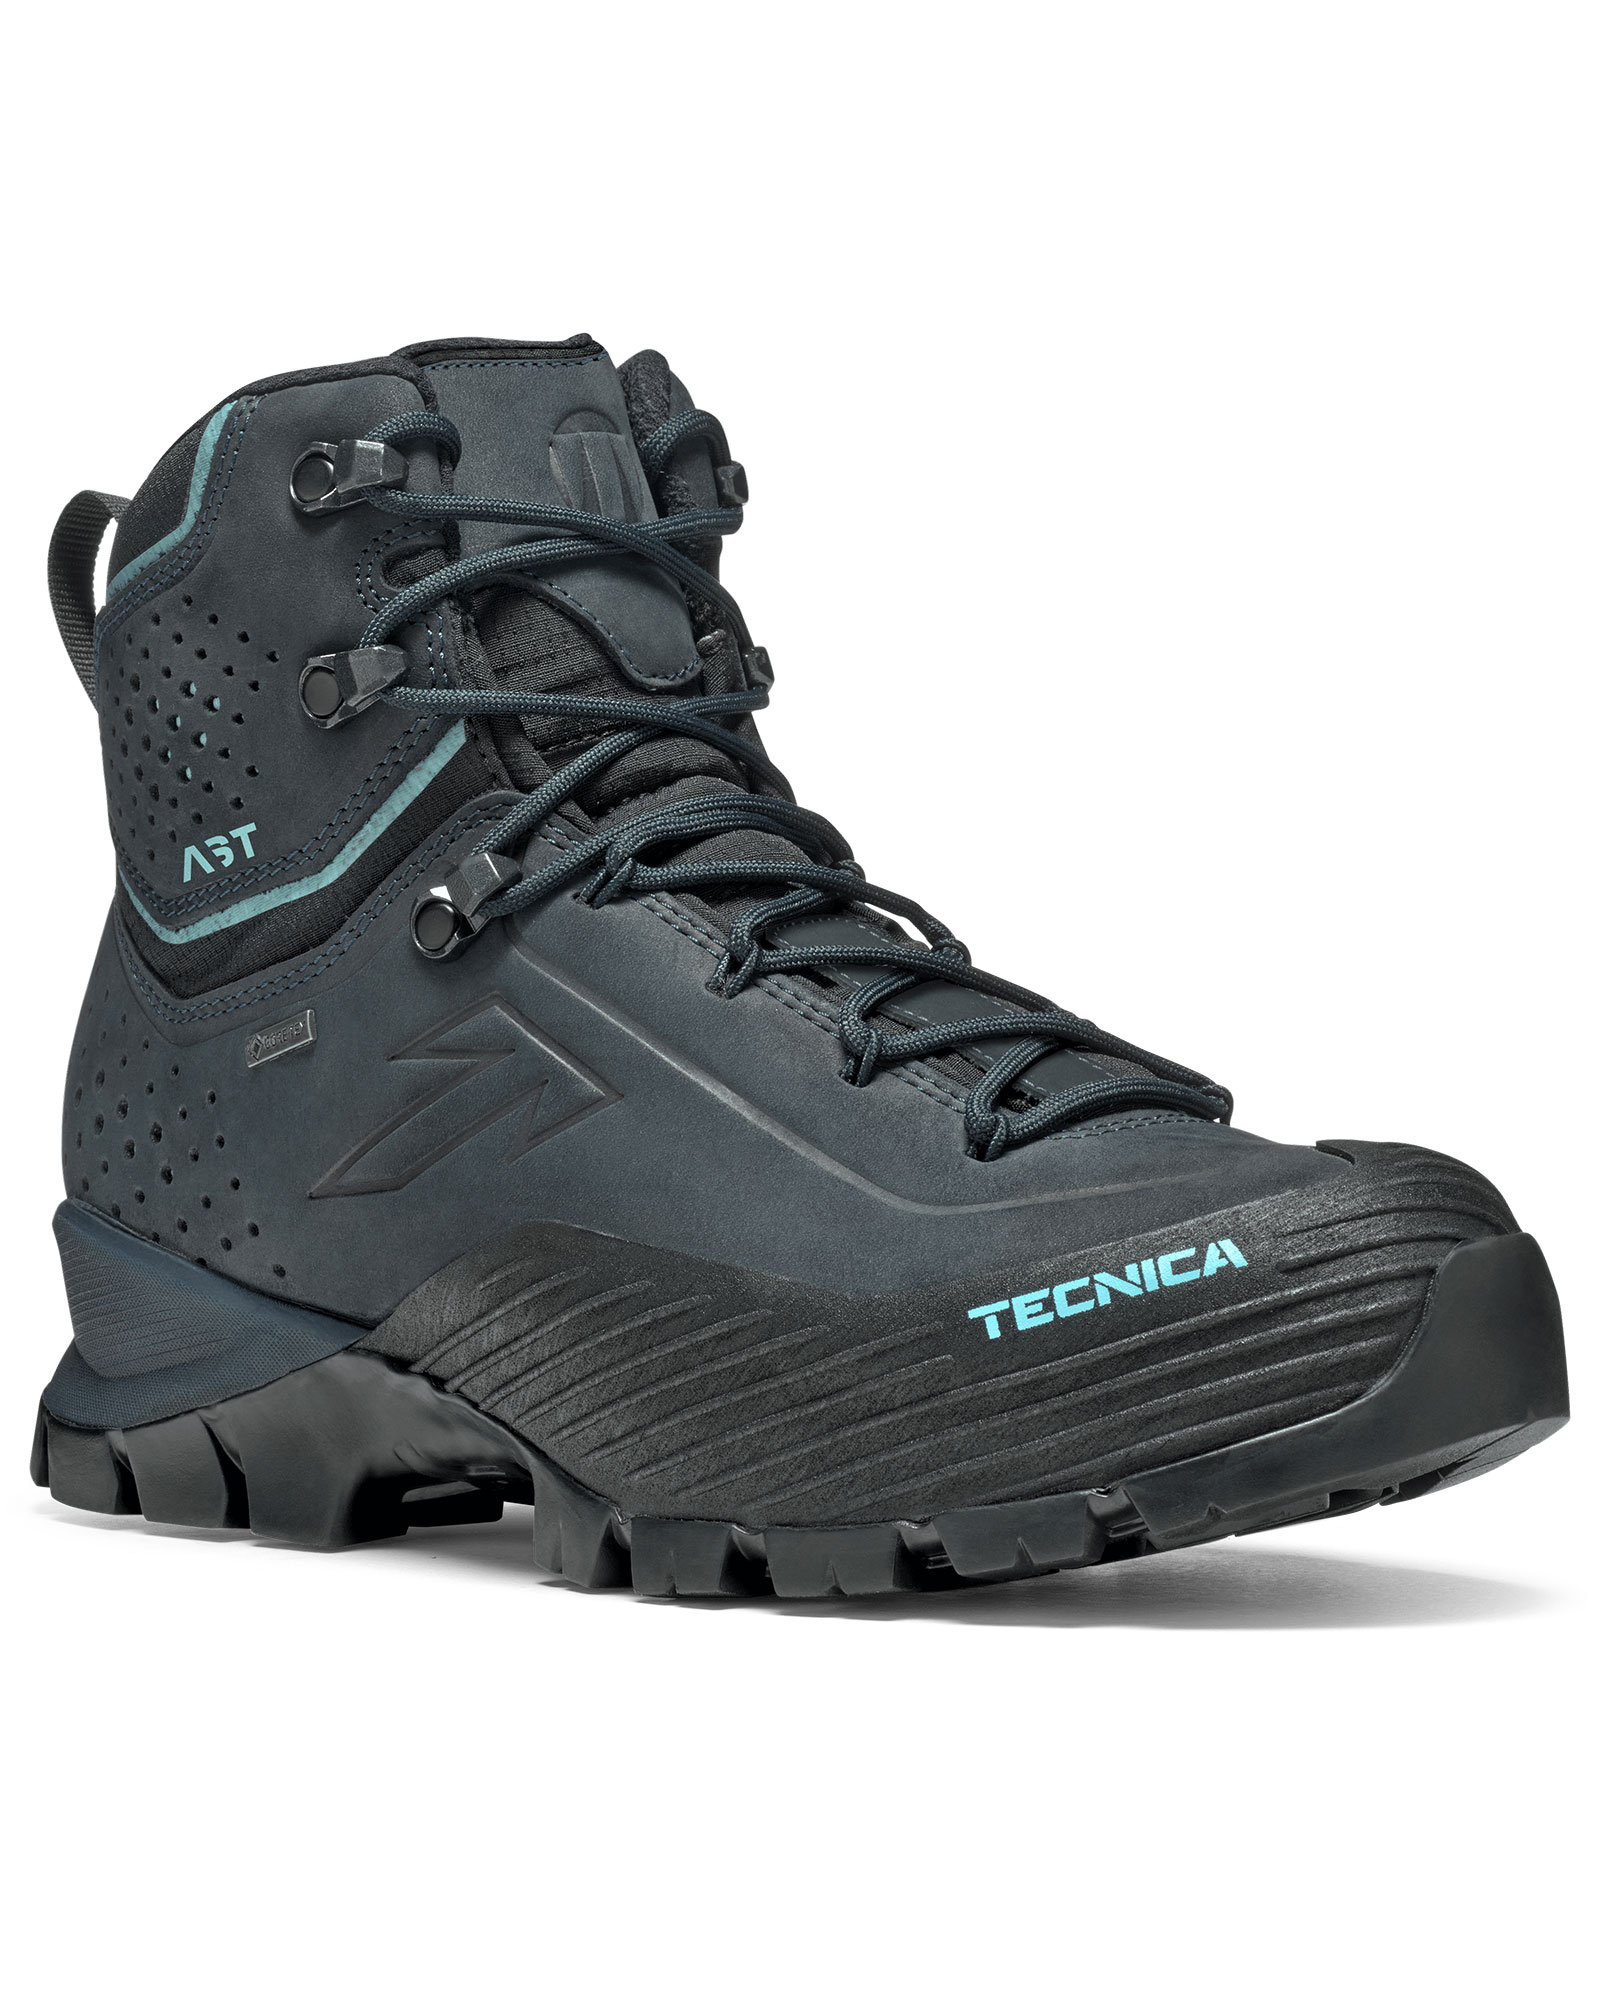 Tecnica Forge 2.0 GORE TEX Women’s Boots - Dark Avio/Light Blueness UK 8